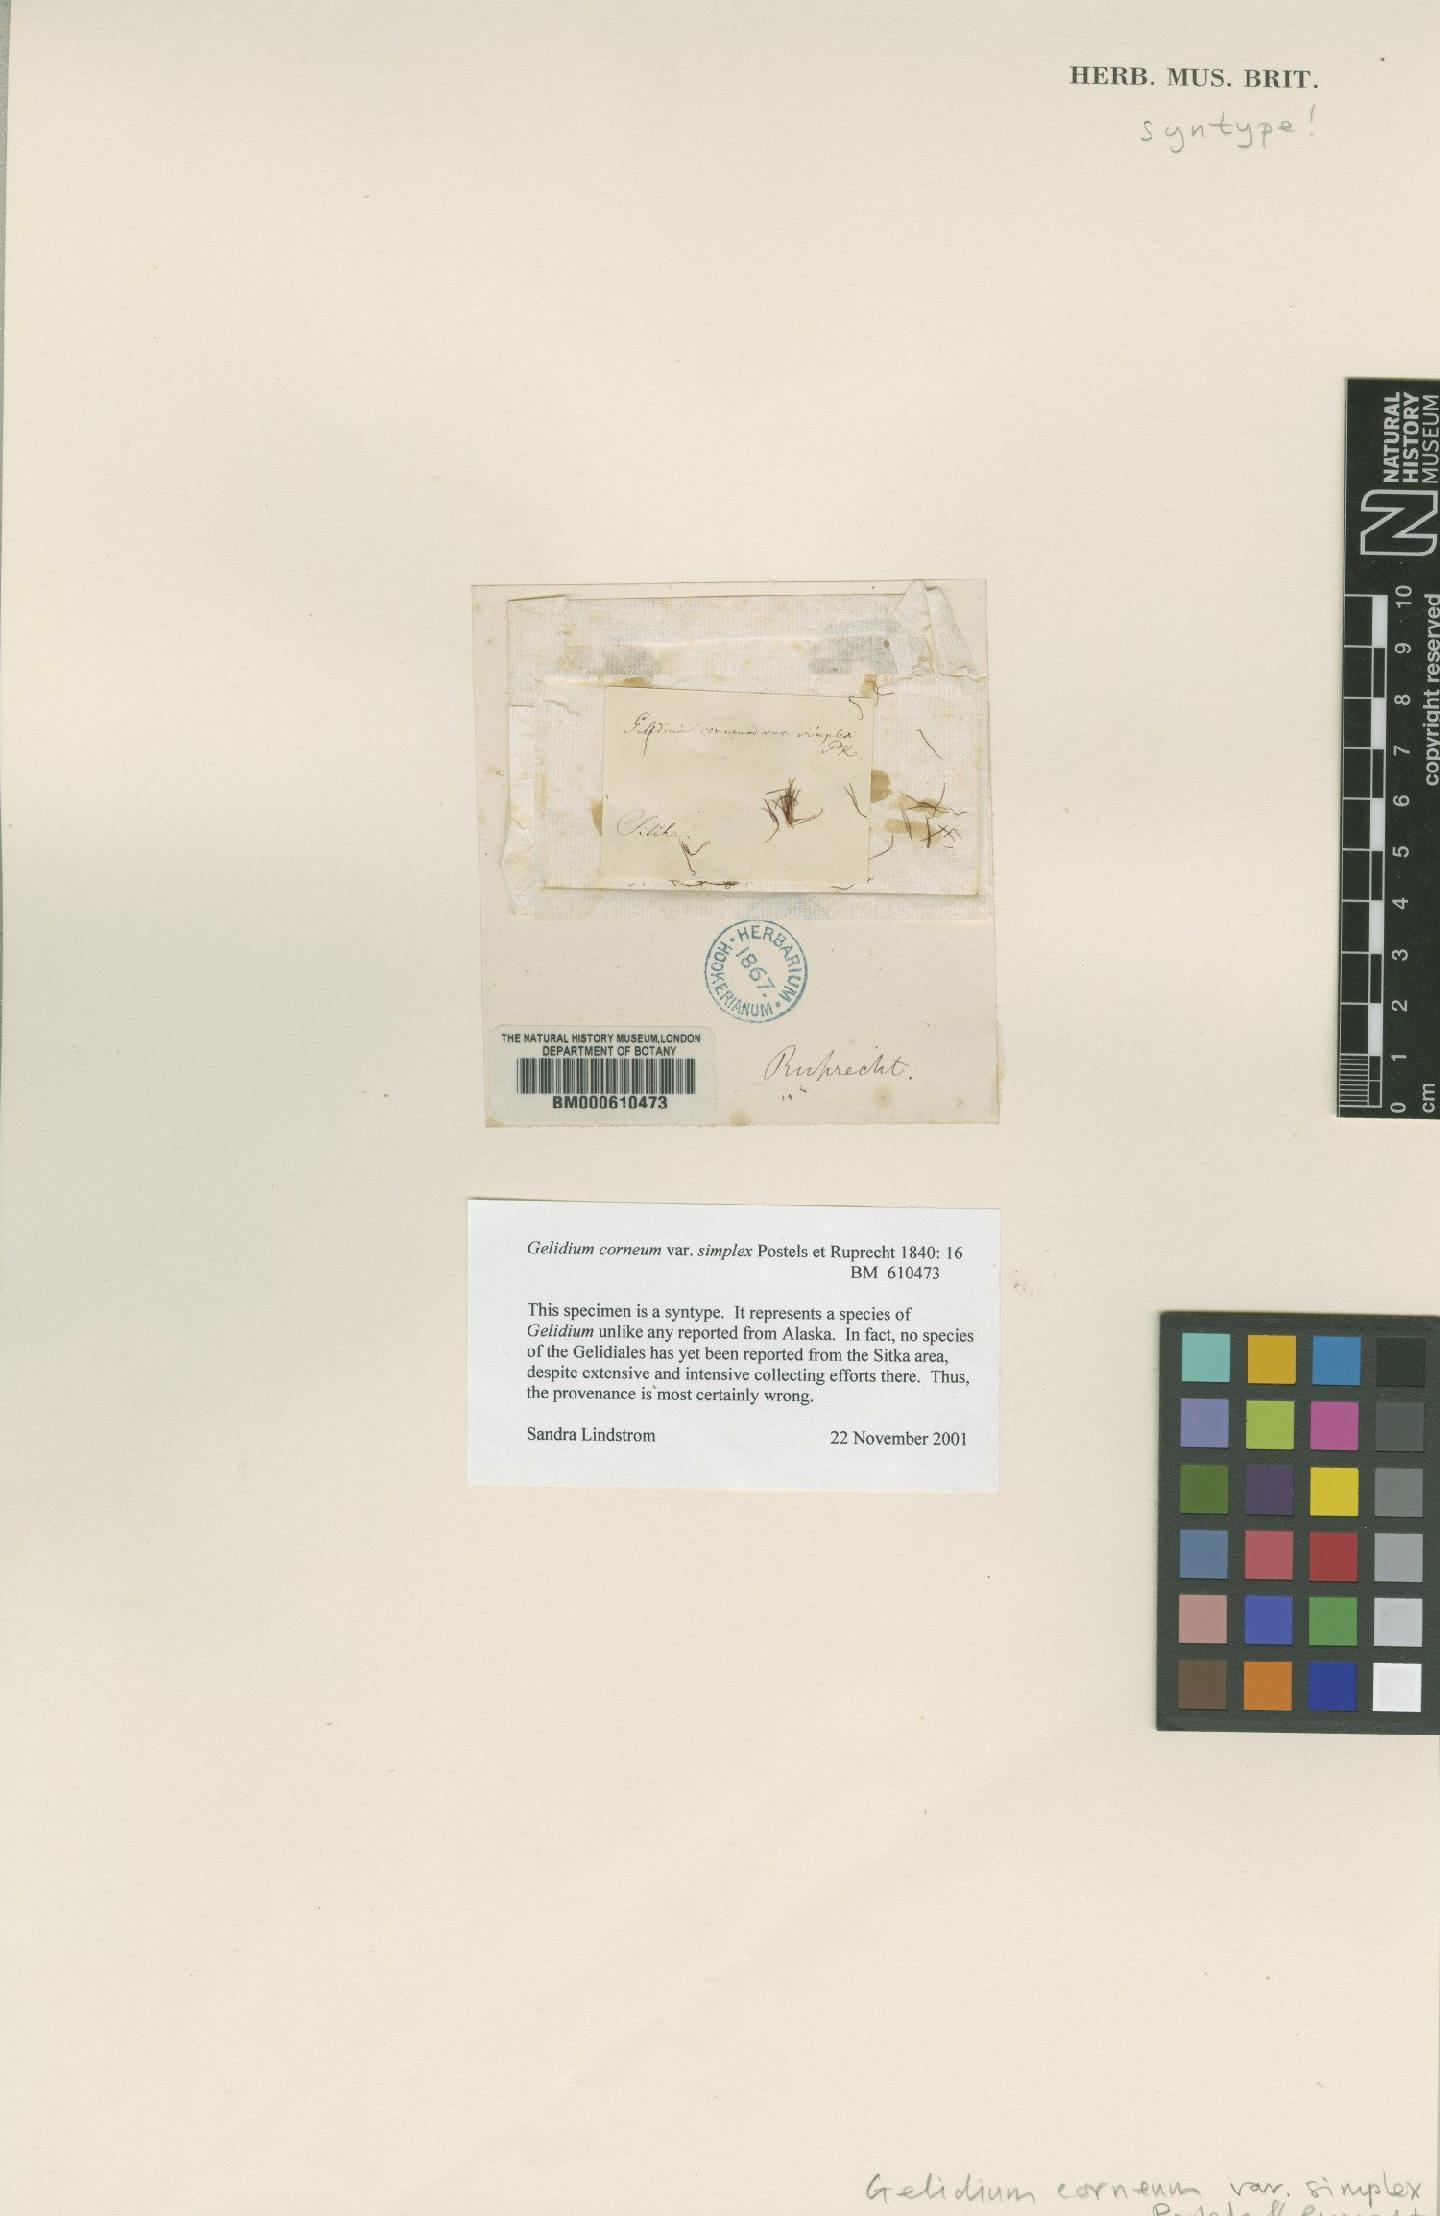 To NHMUK collection (Gelidium corneum var. simplex Postels & Ruprecht; Syntype; NHMUK:ecatalogue:4789092)